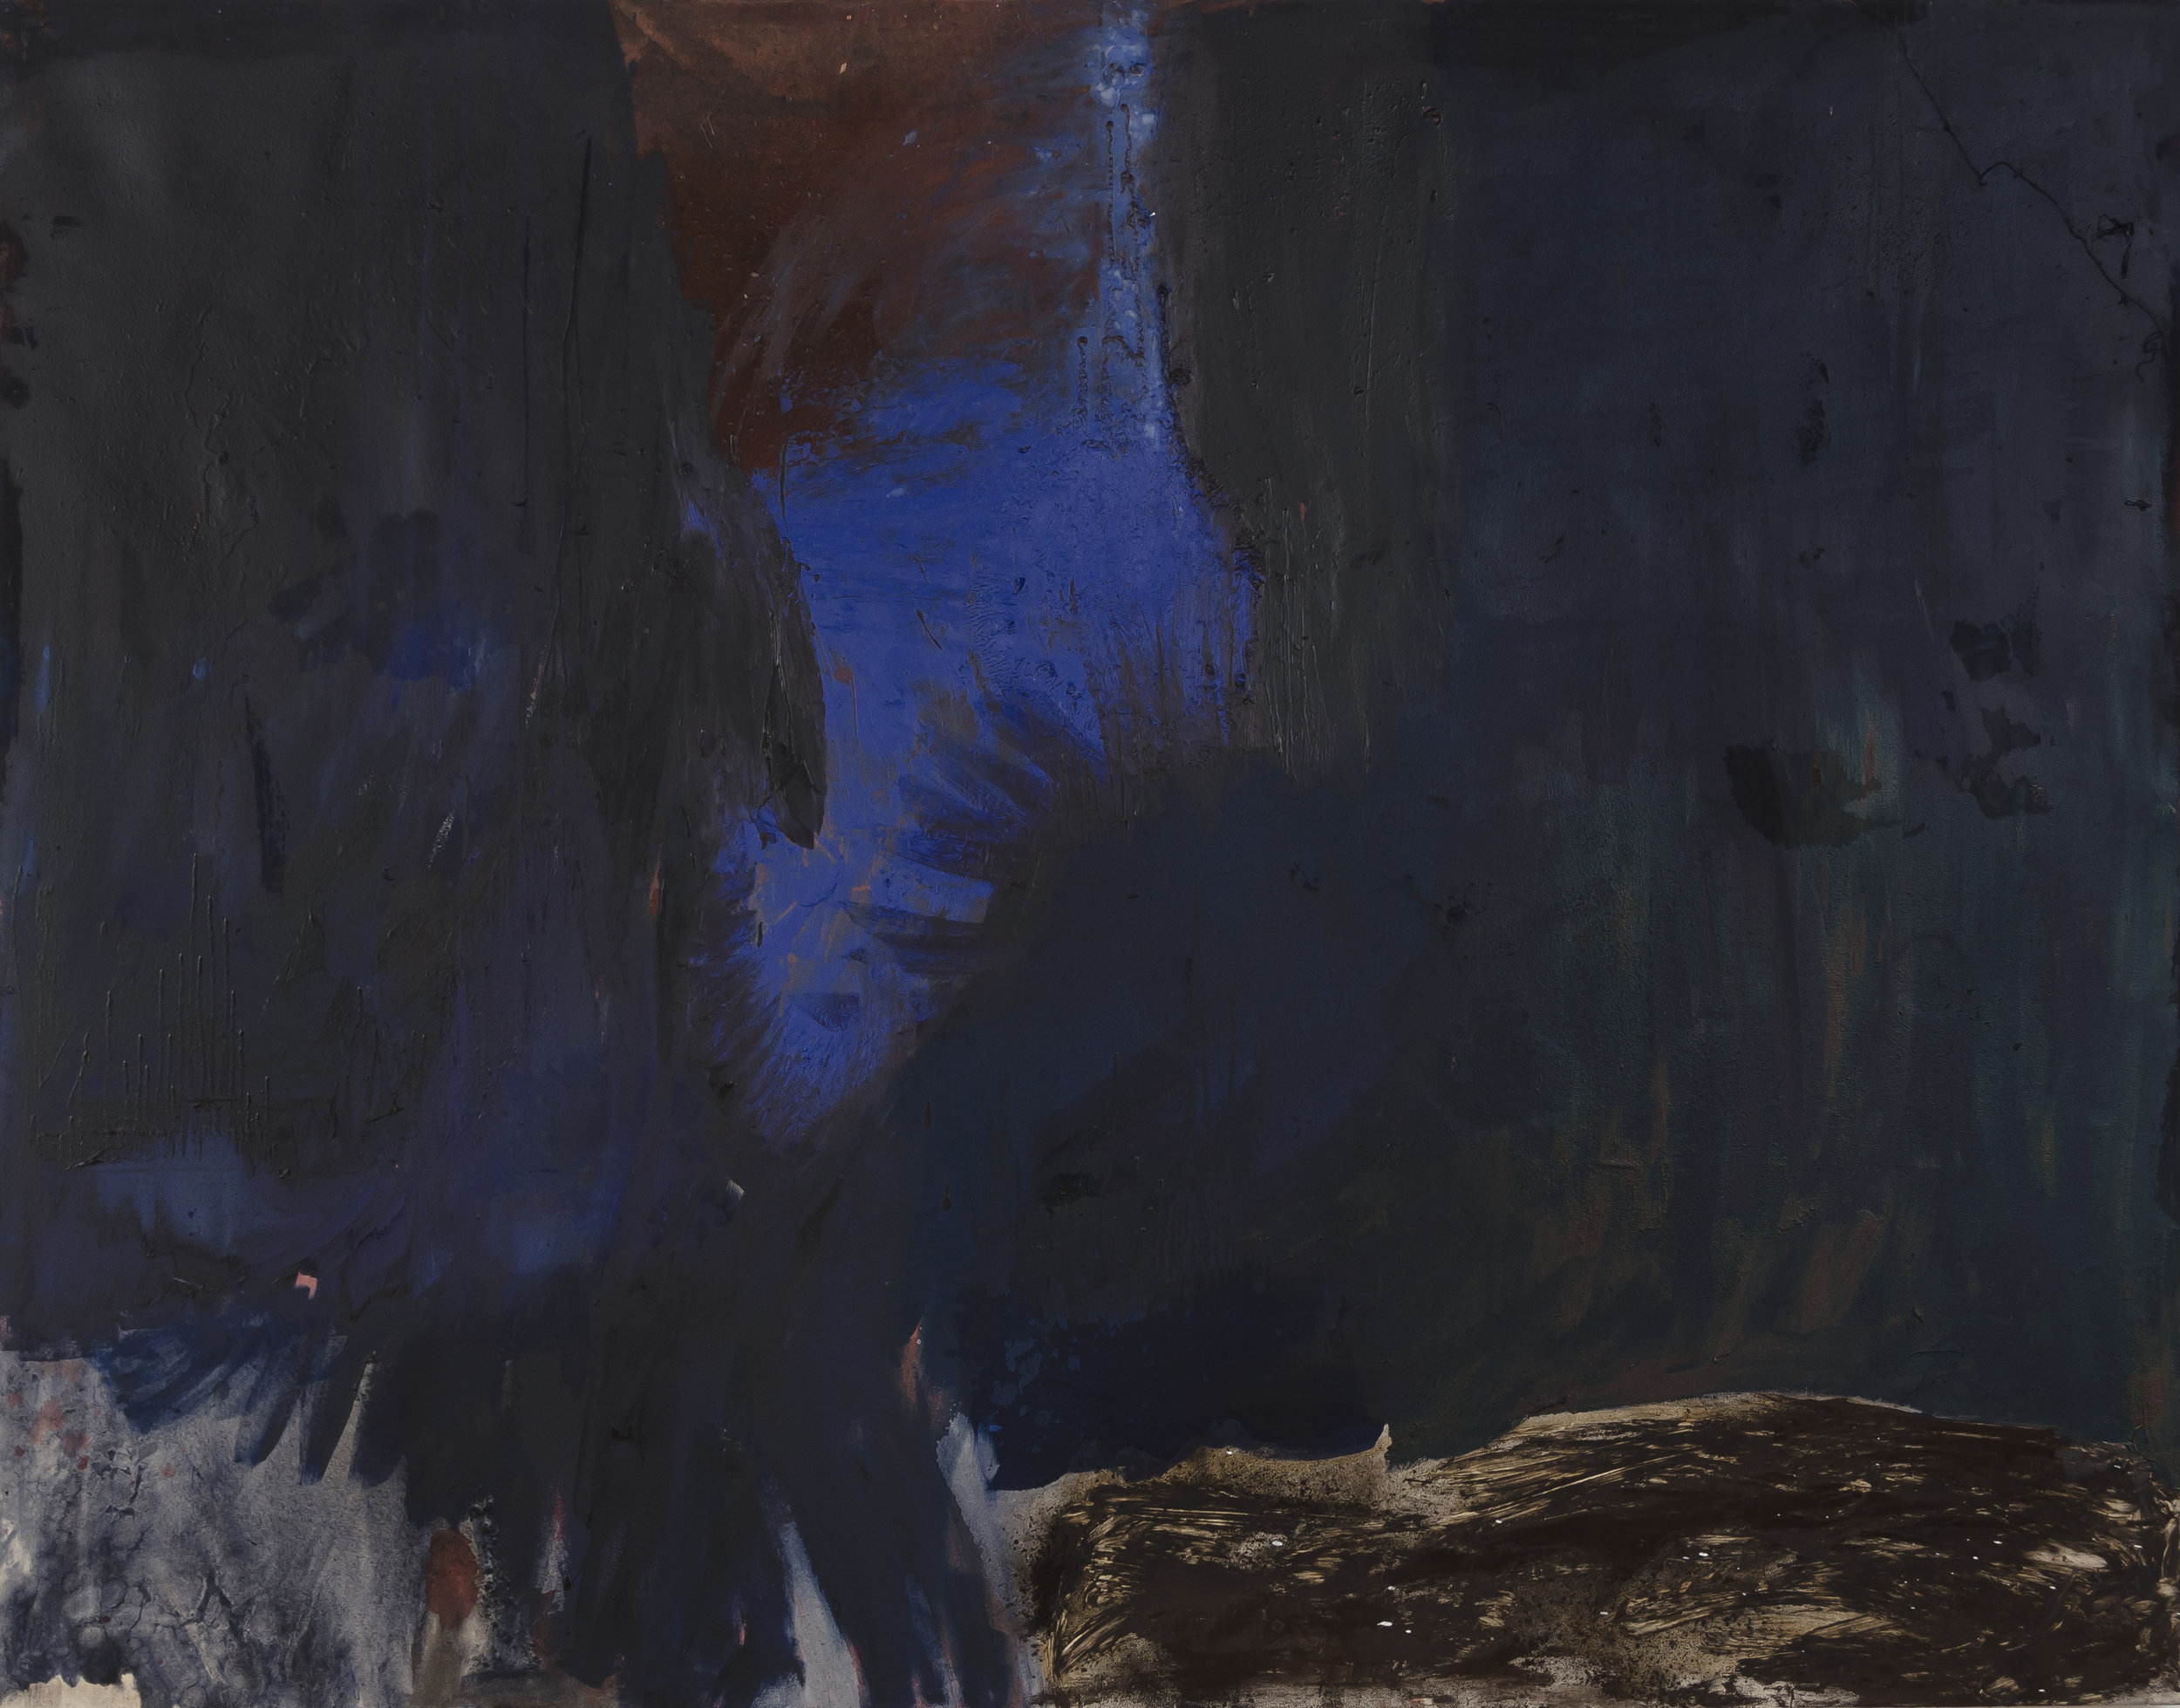    Neptune . Oil on canvas.&nbsp;    72" x 90". 2015.&nbsp;        